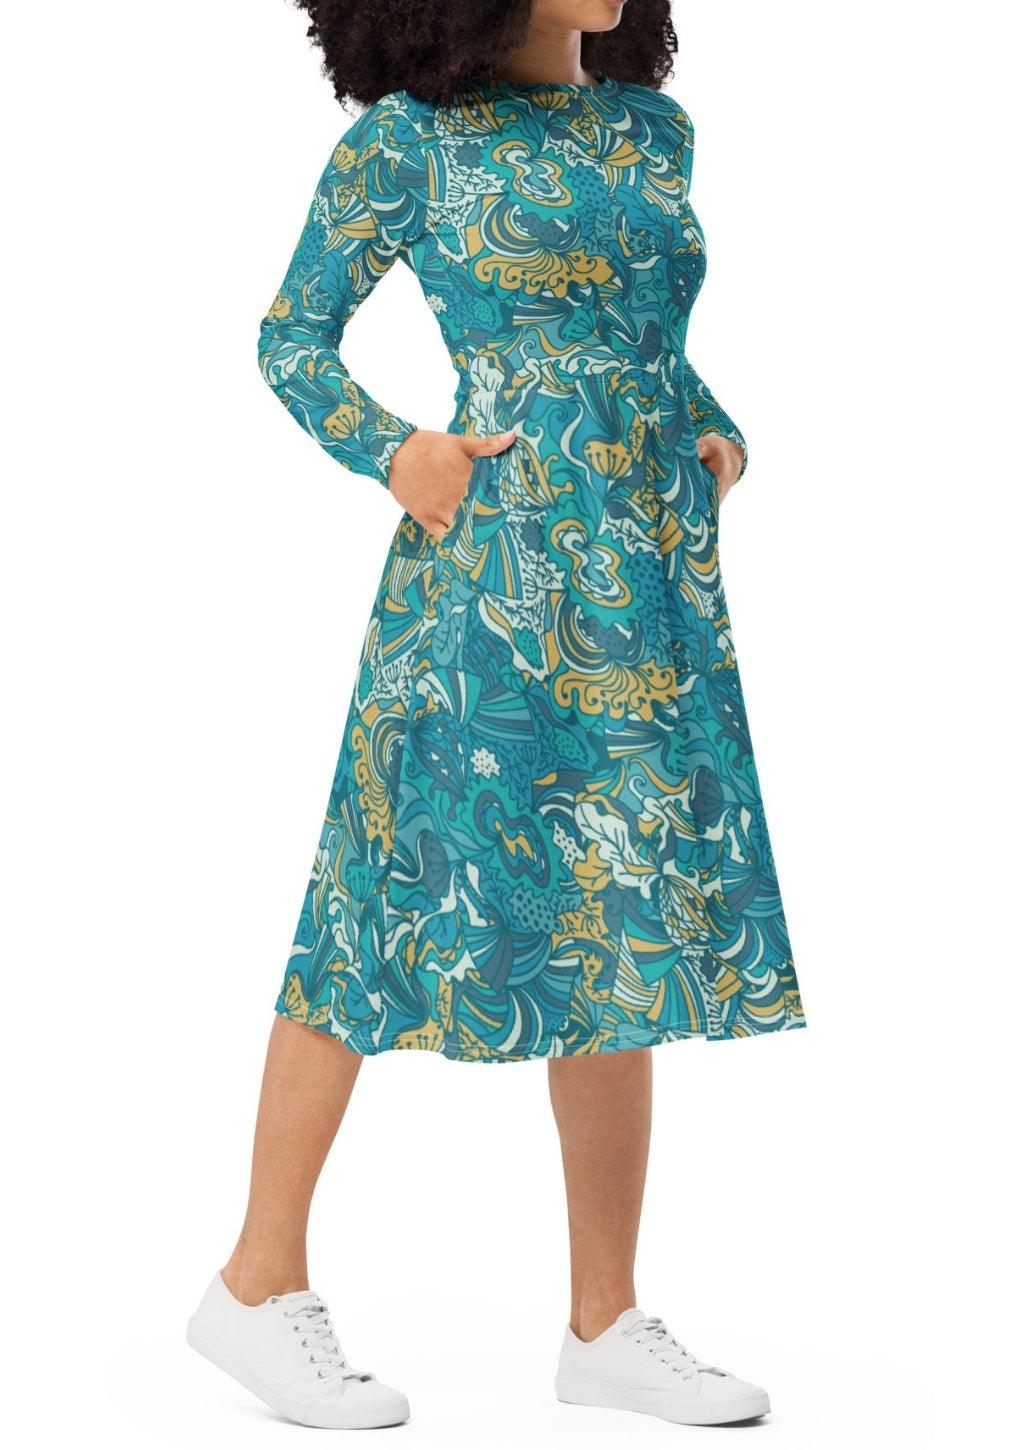 Masu Long Sleeve Midi Fit & Flare Dress - Abstract Paisley Floral Retro Print - Green Blue